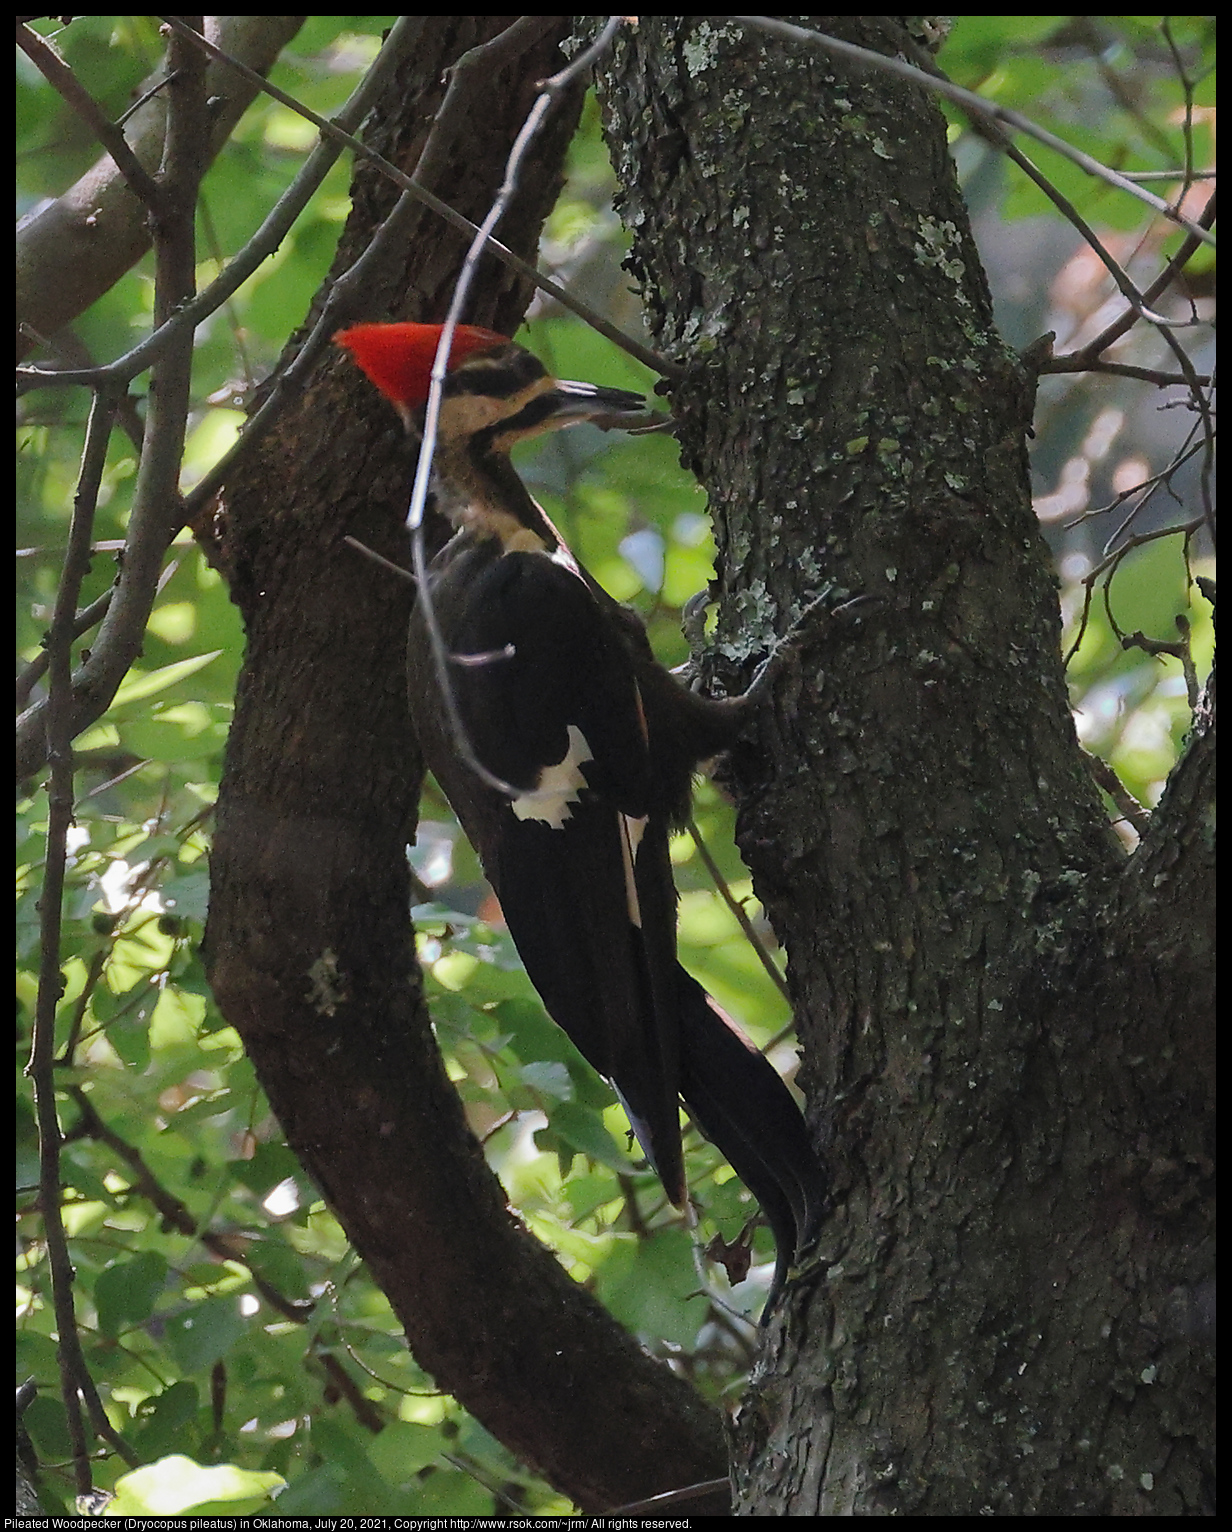 Pileated Woodpecker (Dryocopus pileatus) in Oklahoma, July 20, 2021